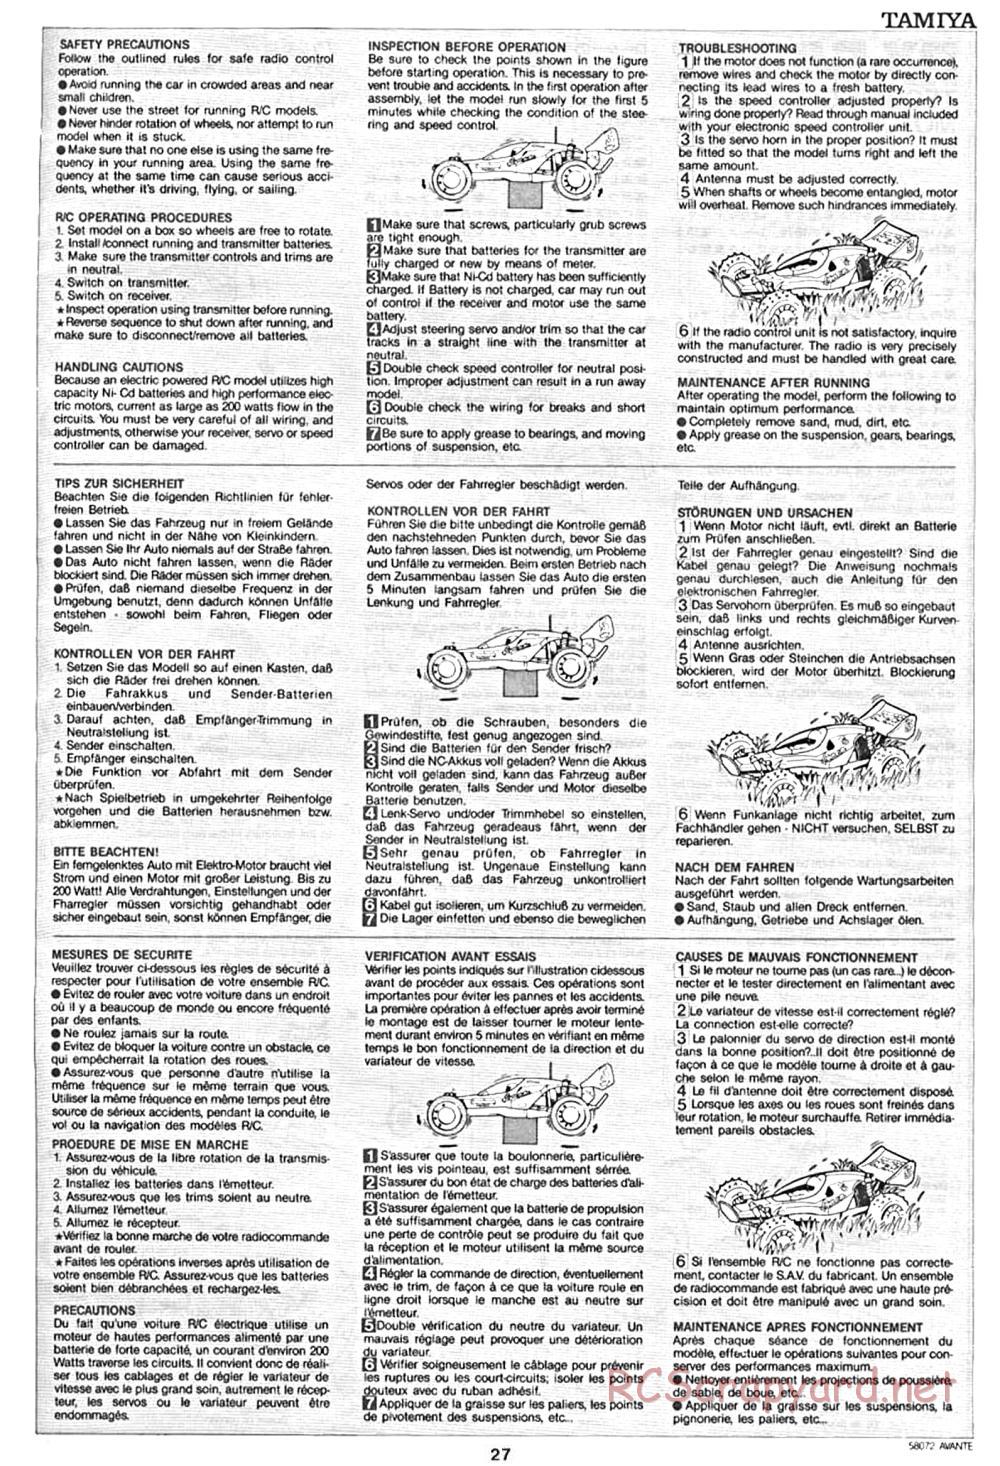 Tamiya - Avante - 58072 - Manual - Page 27